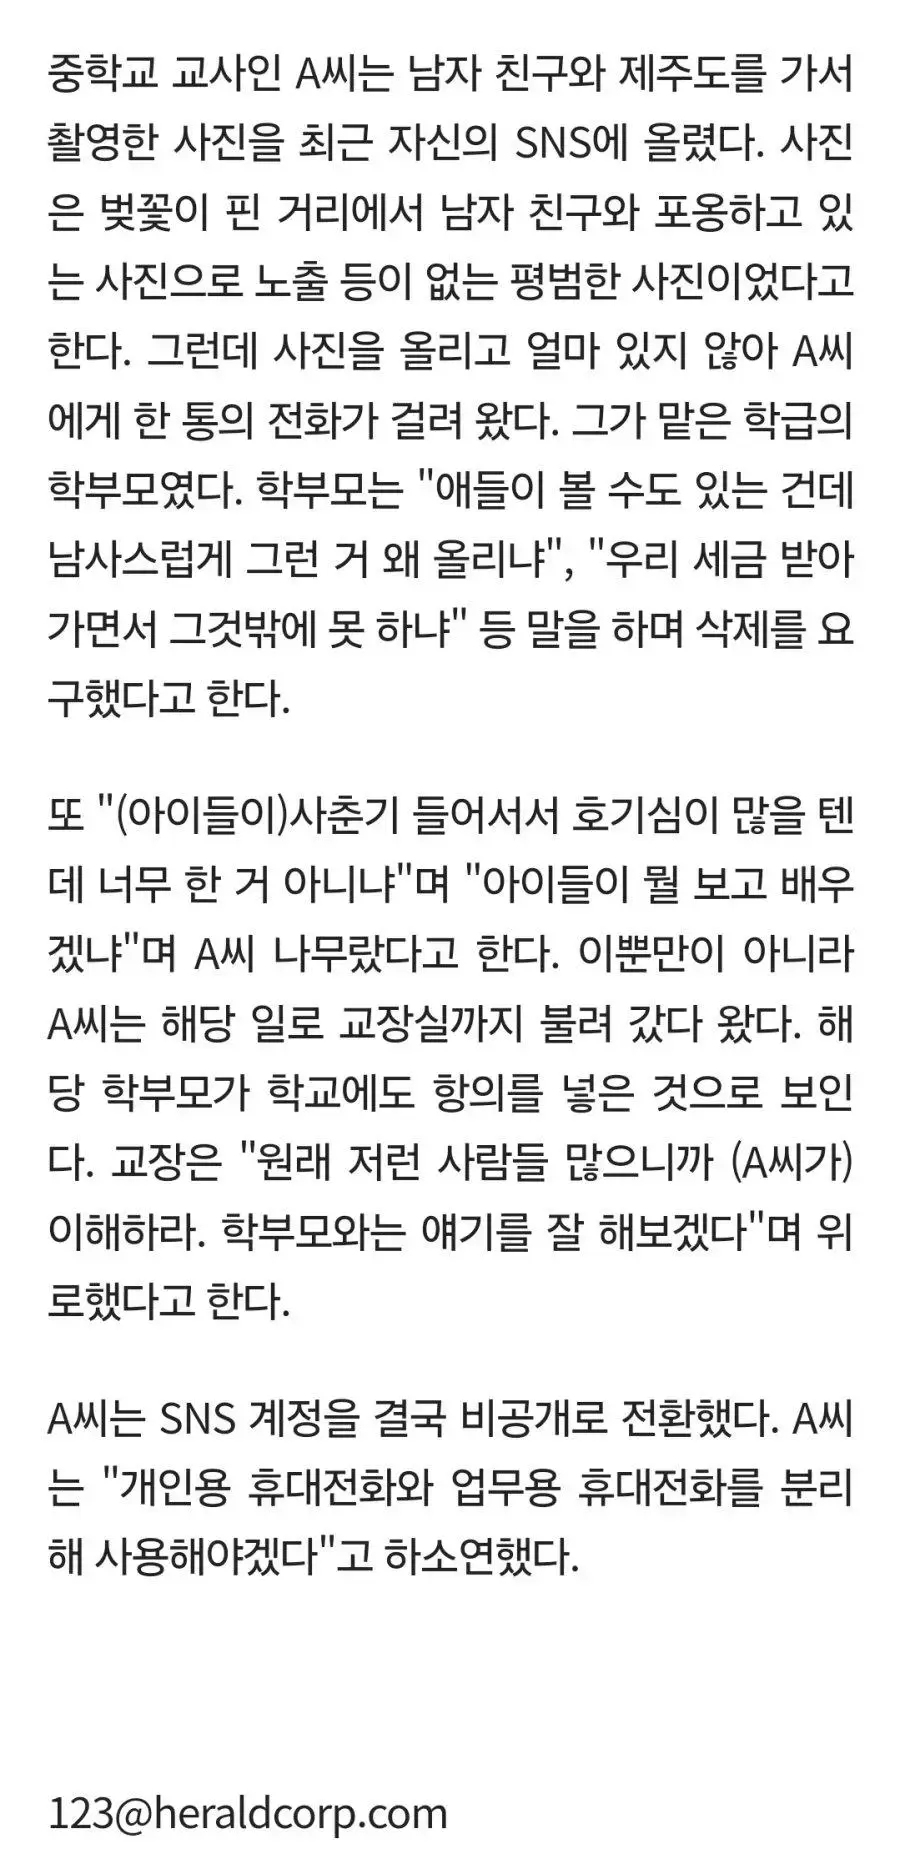 SNS에 남친 사진 올린 교사, 학부모에 뭇매 | mbong.kr 엠봉